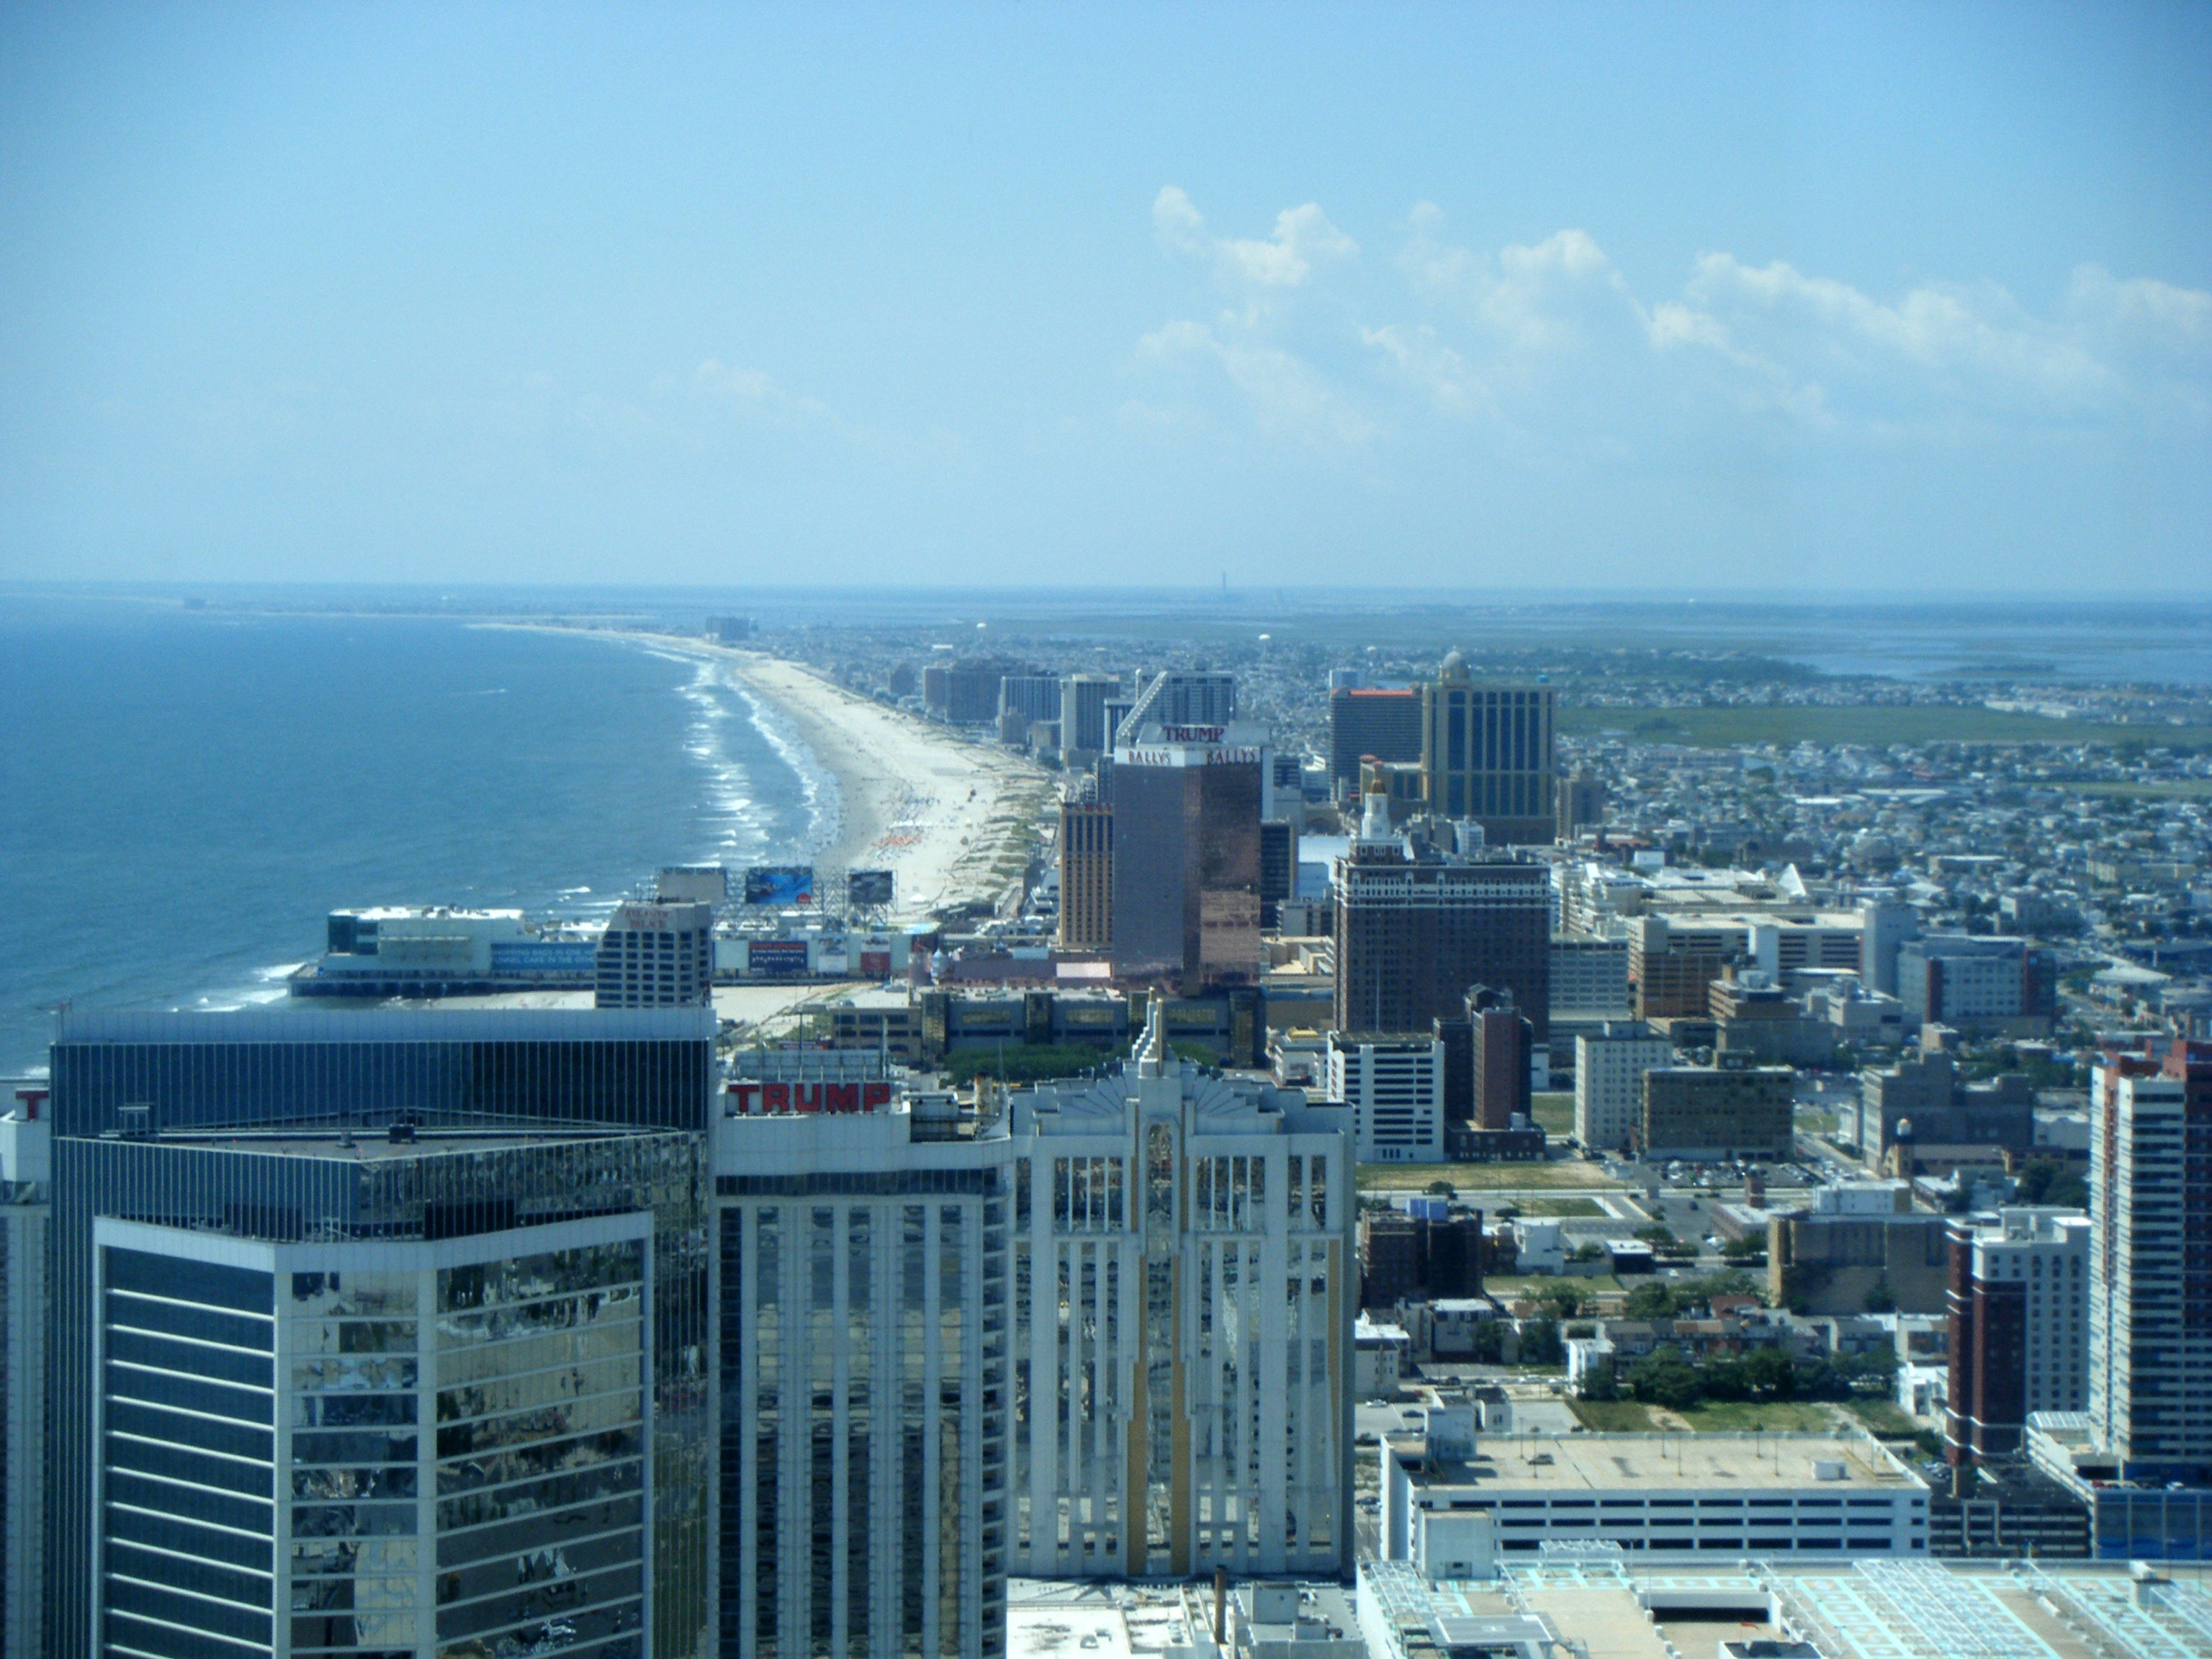 Urban Shoreline in Atlantic City, New Jersey image - Free stock photo